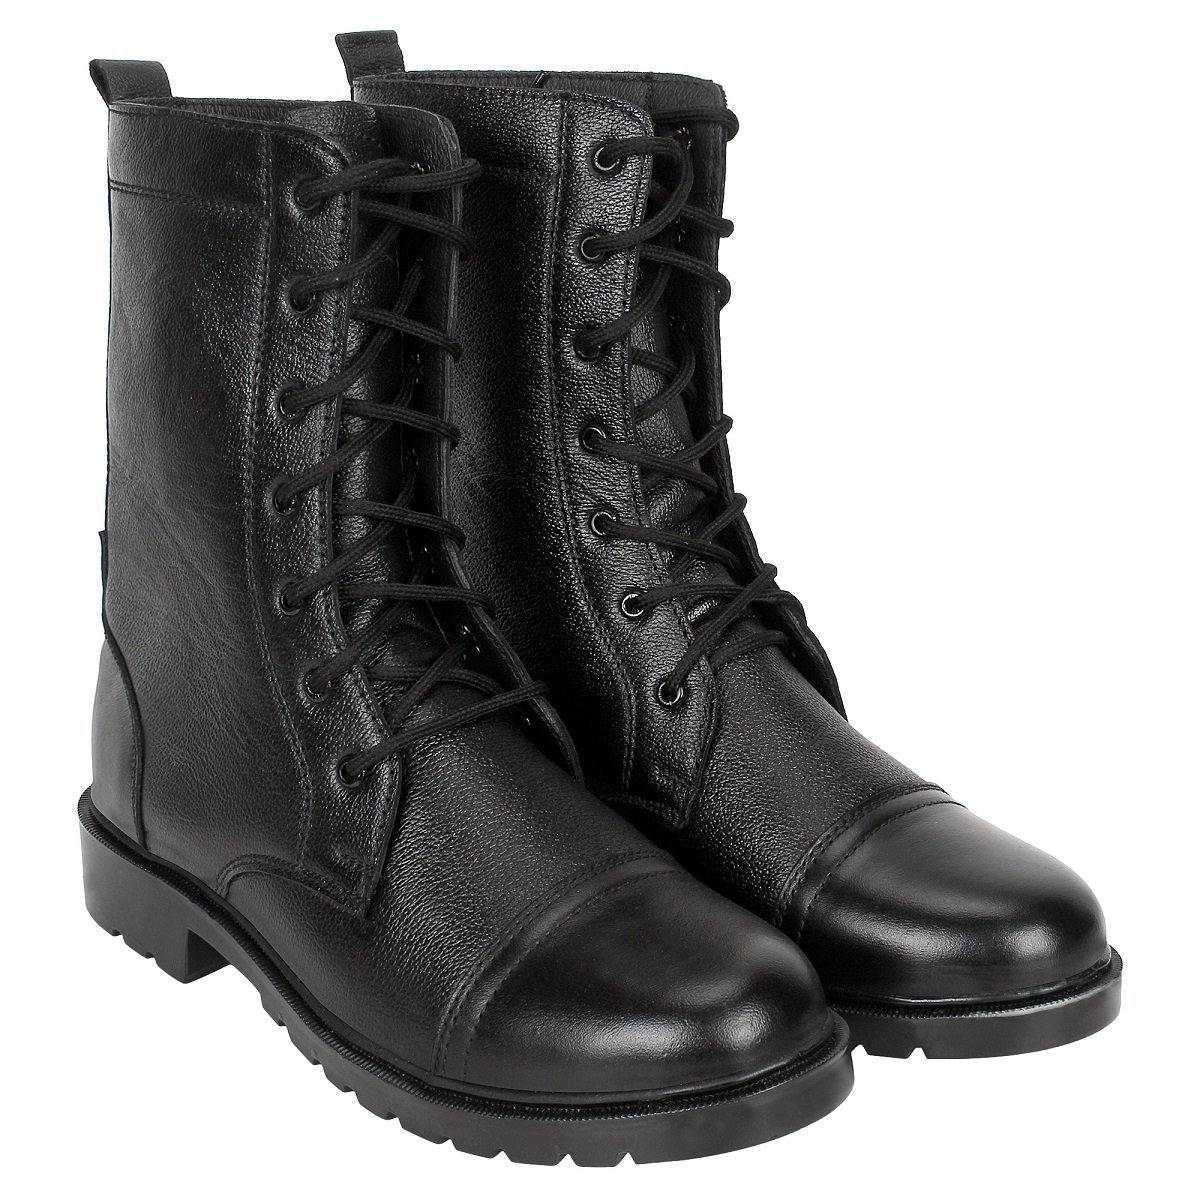 Army Military Boots - SeeandWear